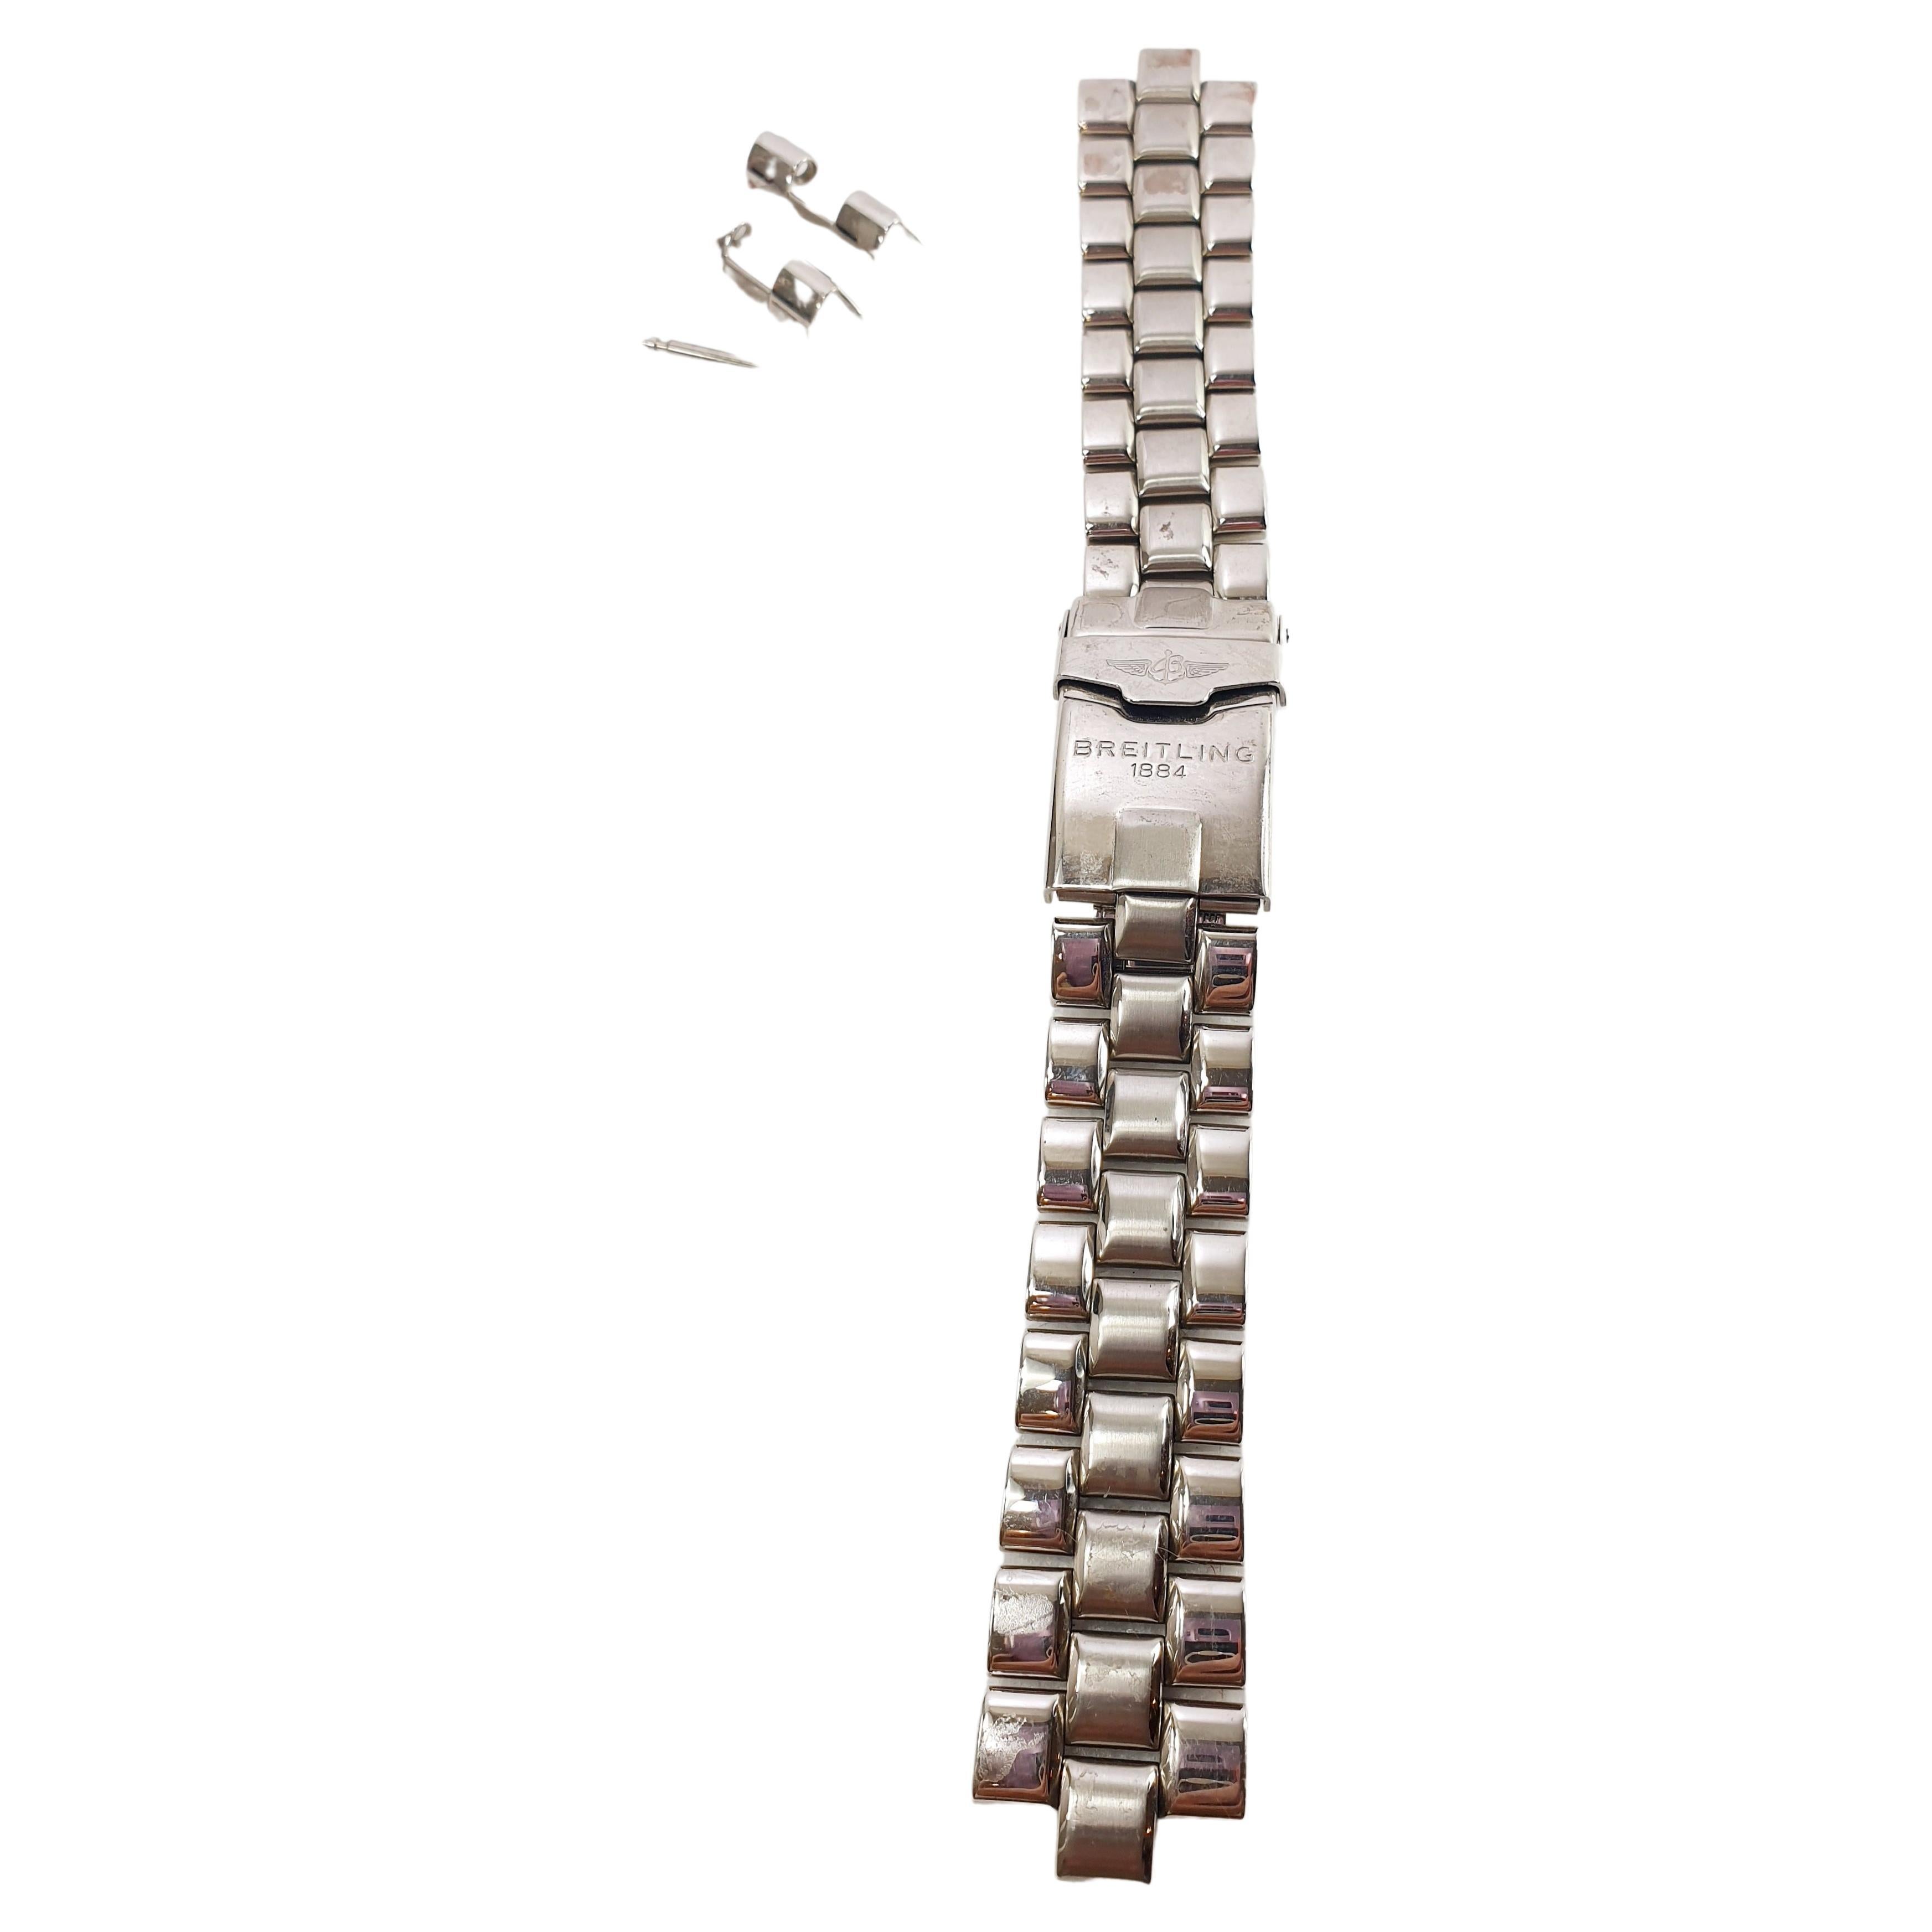 Edelstahl-Breitling-Armband